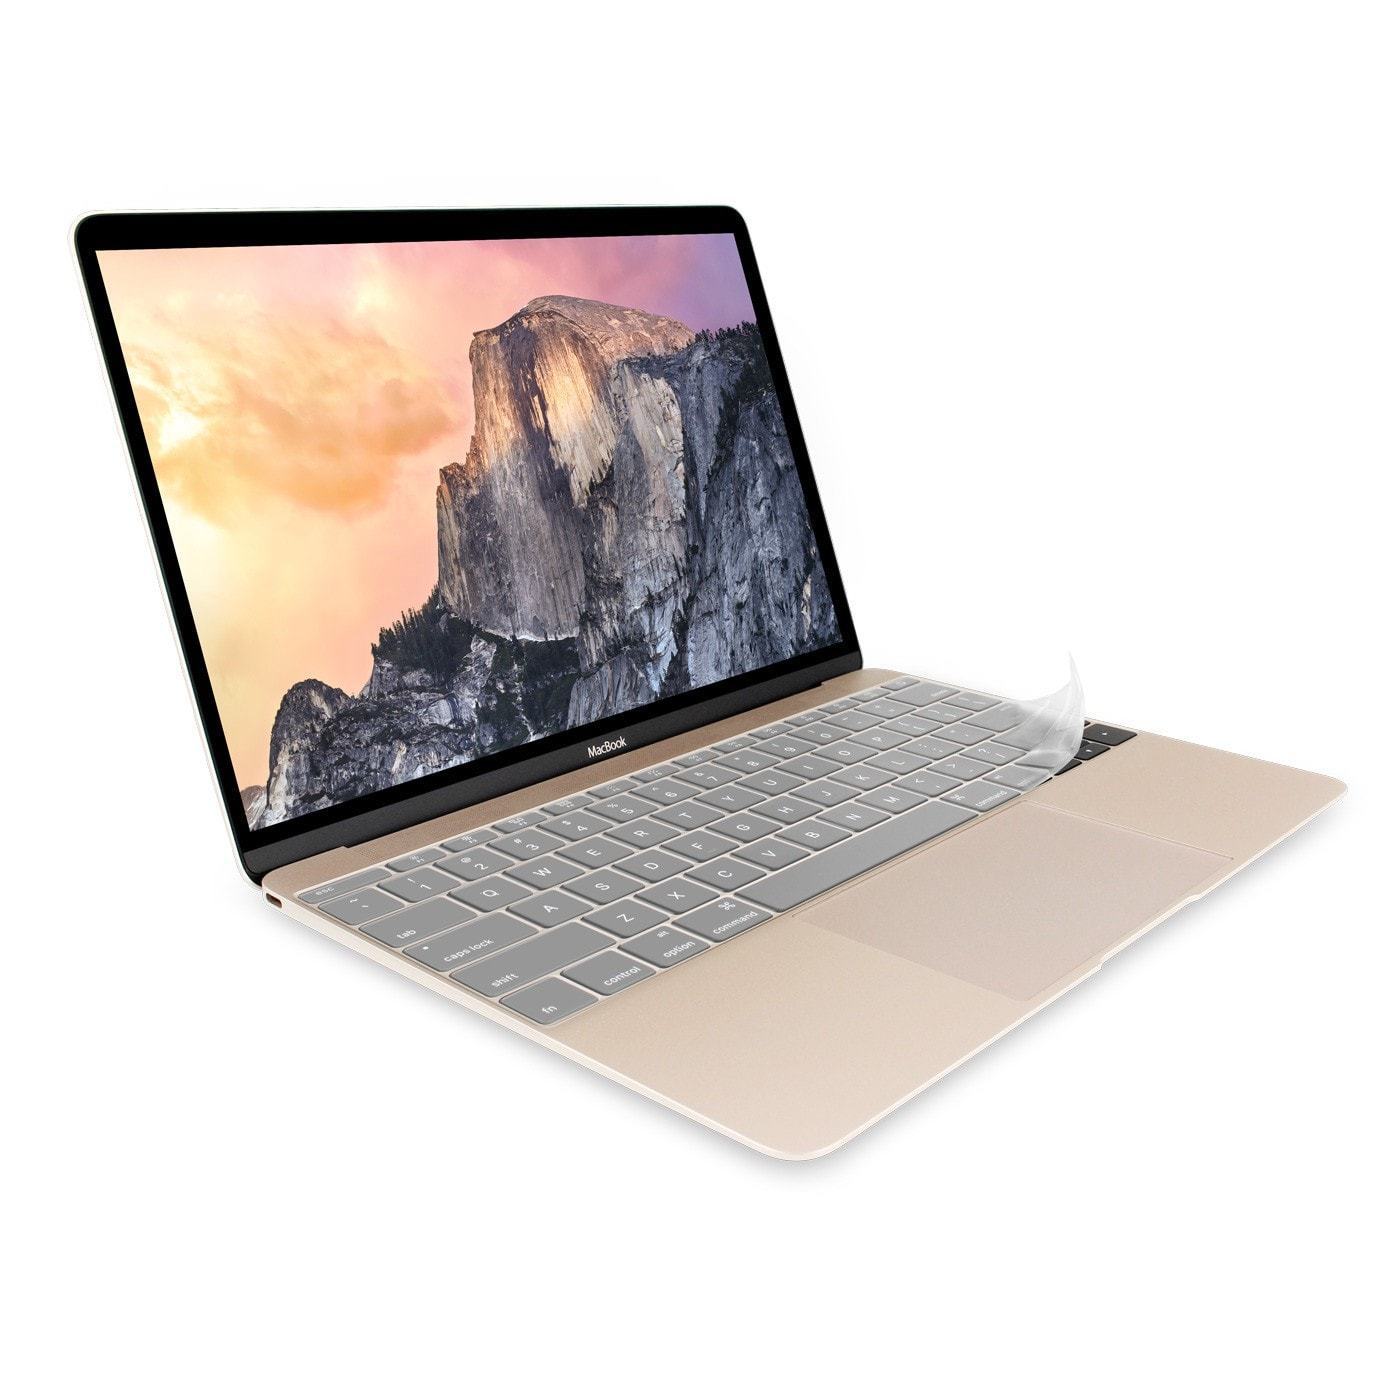 JCPal Keyboard Protector FitSkin Ultra Clear Keyboard Protector for MacBook 12" MacBook 12" / US Layout